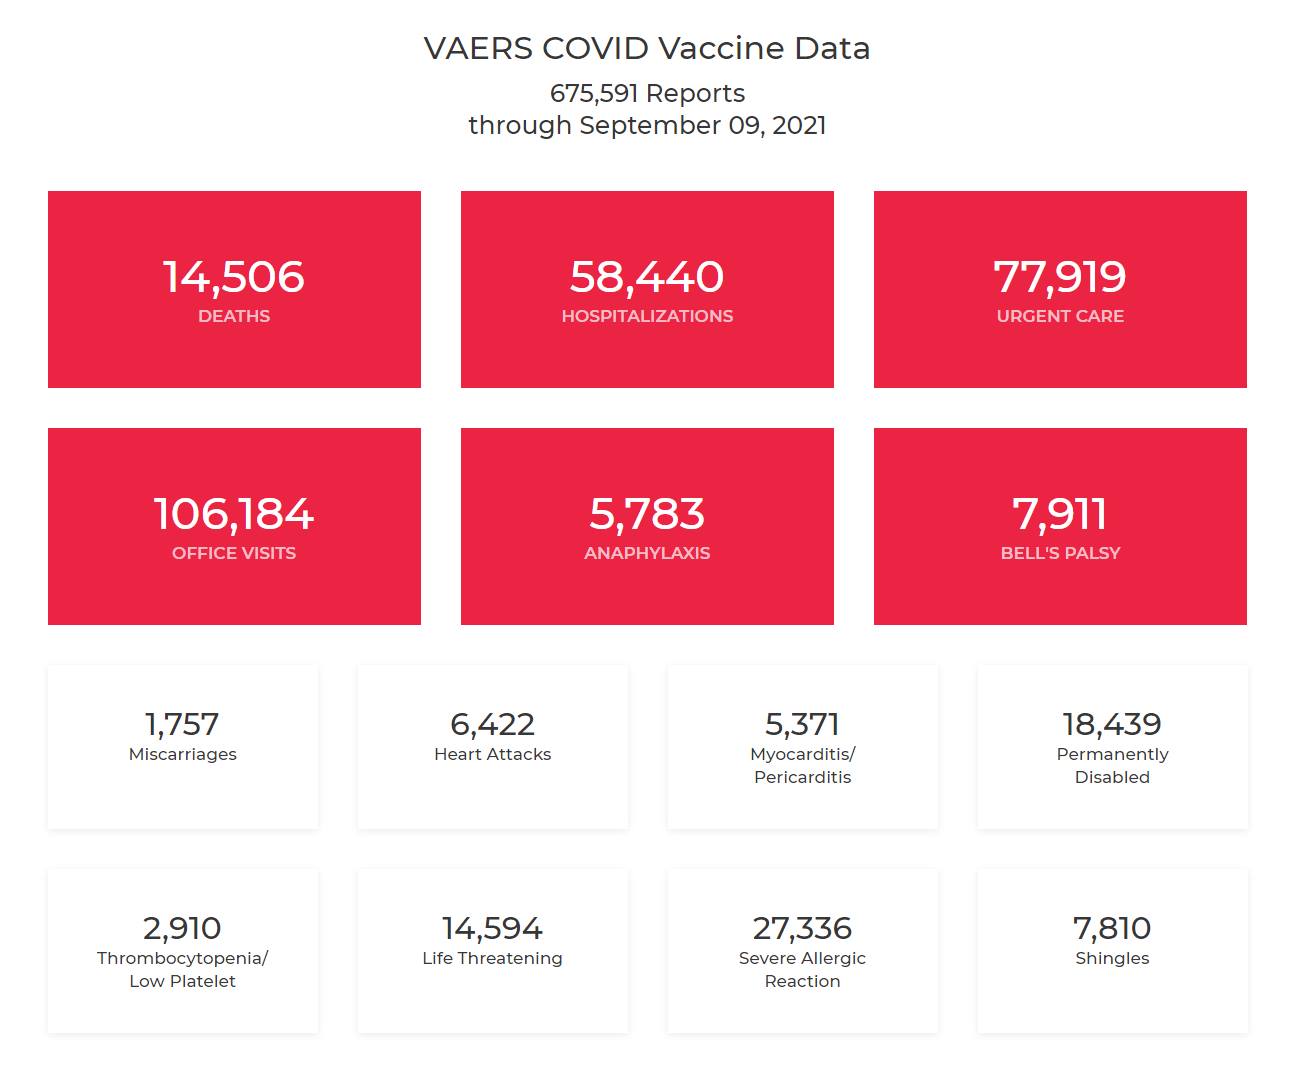 VAERS COVID Vaccine Data through September 9, 2021